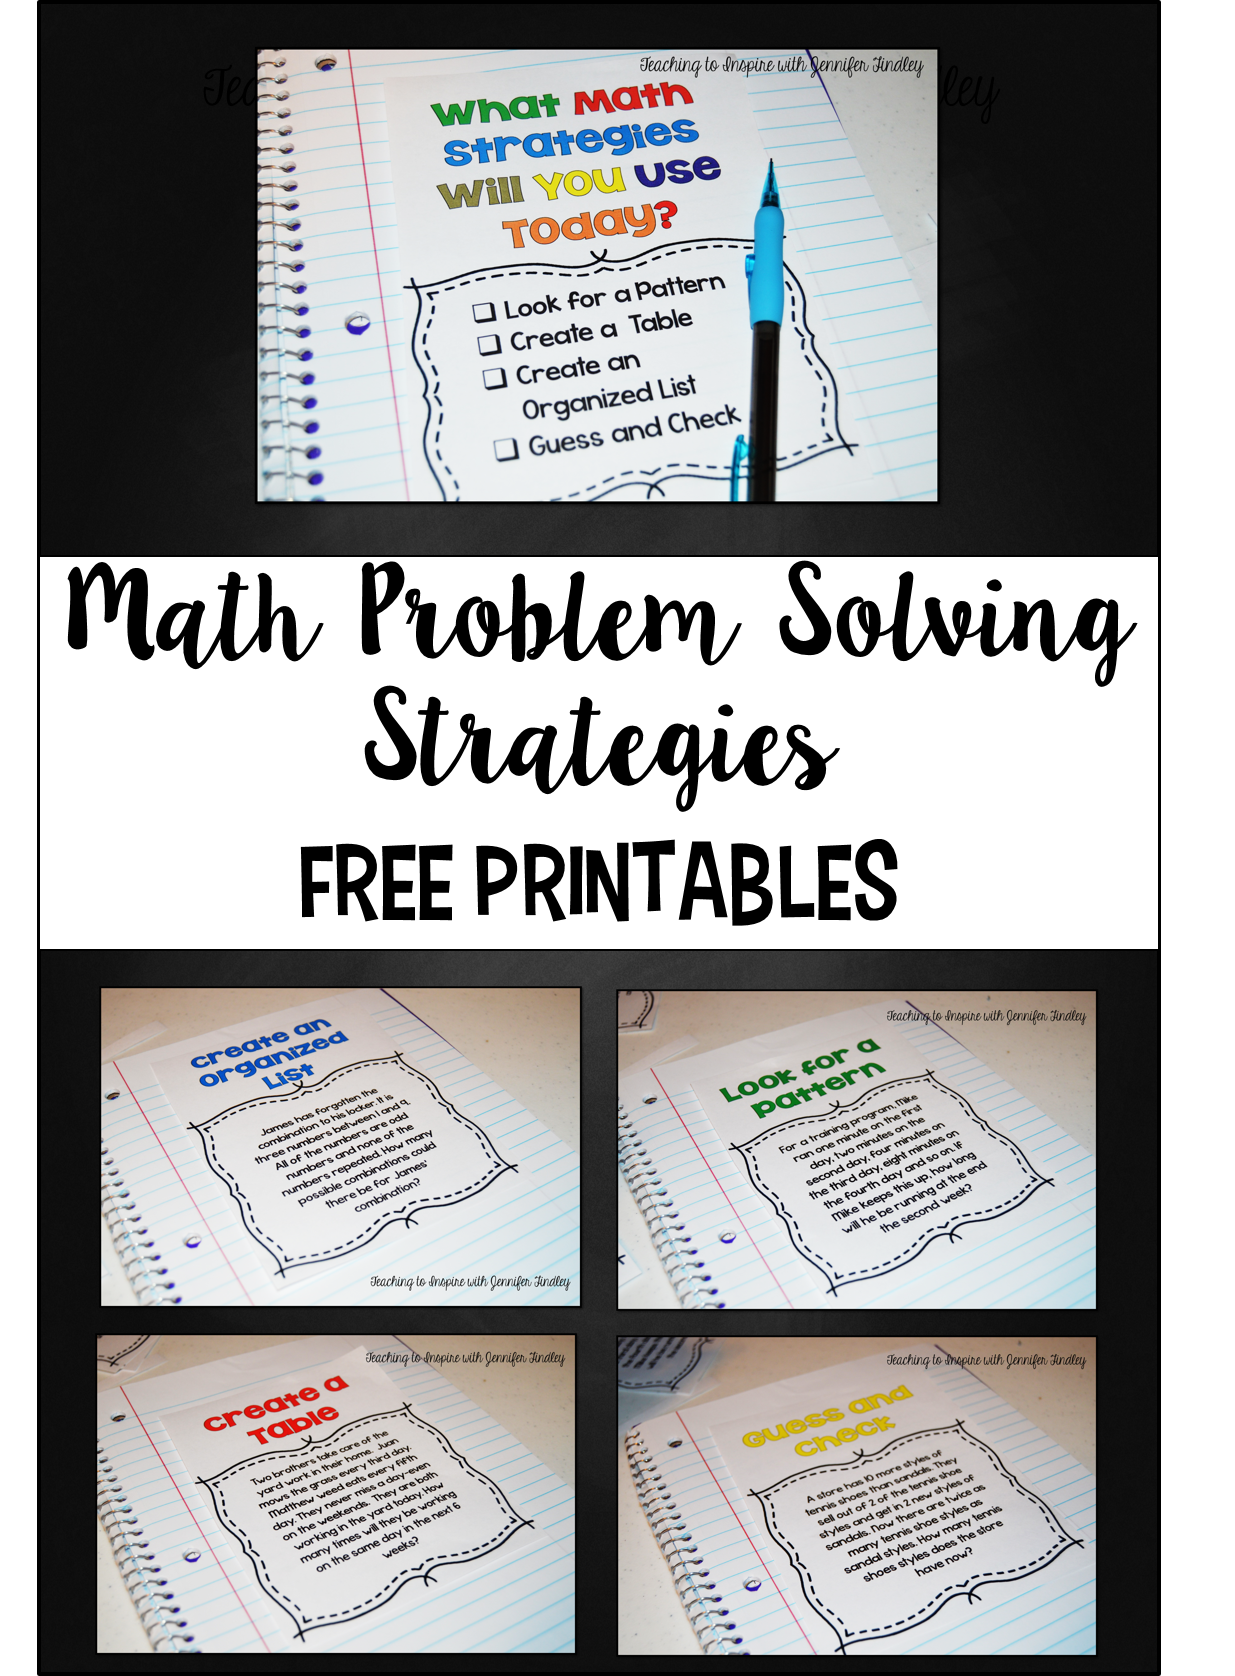 https://jenniferfindley.com//wp-content/uploads/2013/07/Math-problem-solving-strategies.png